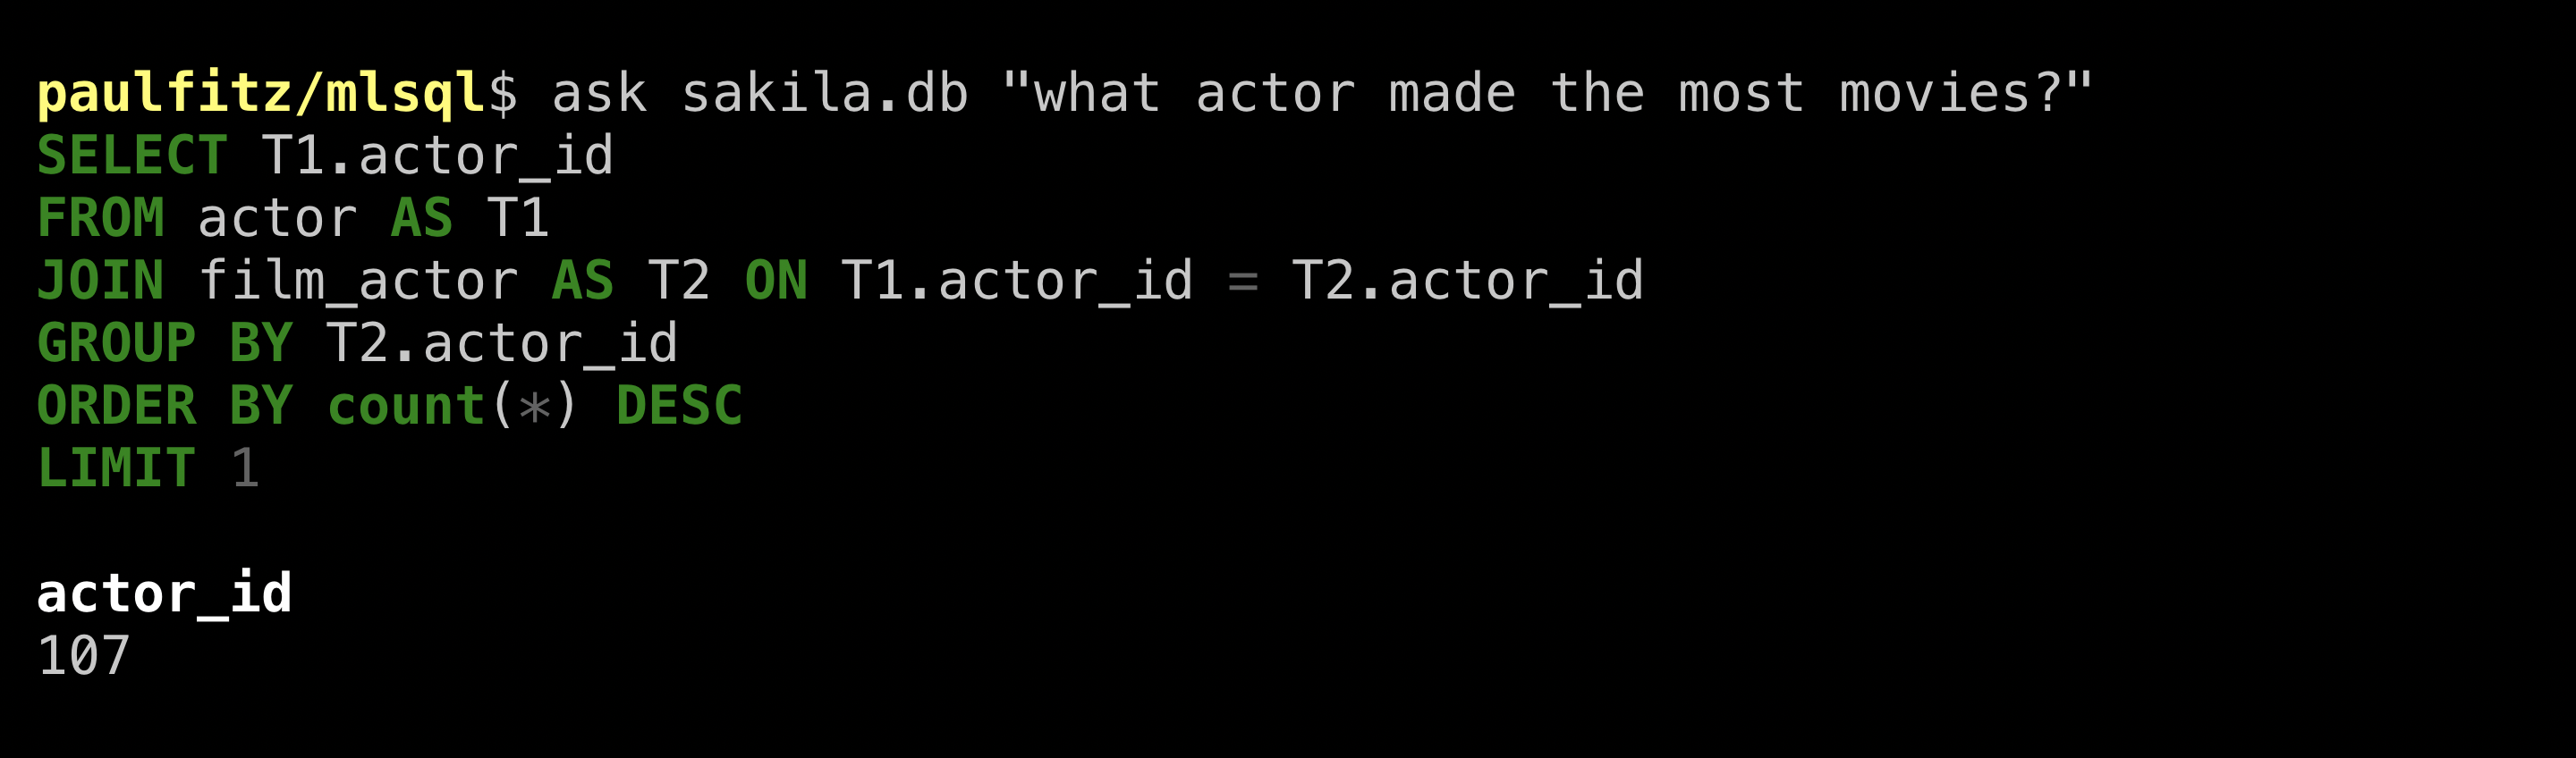 machine query for acting-est actor